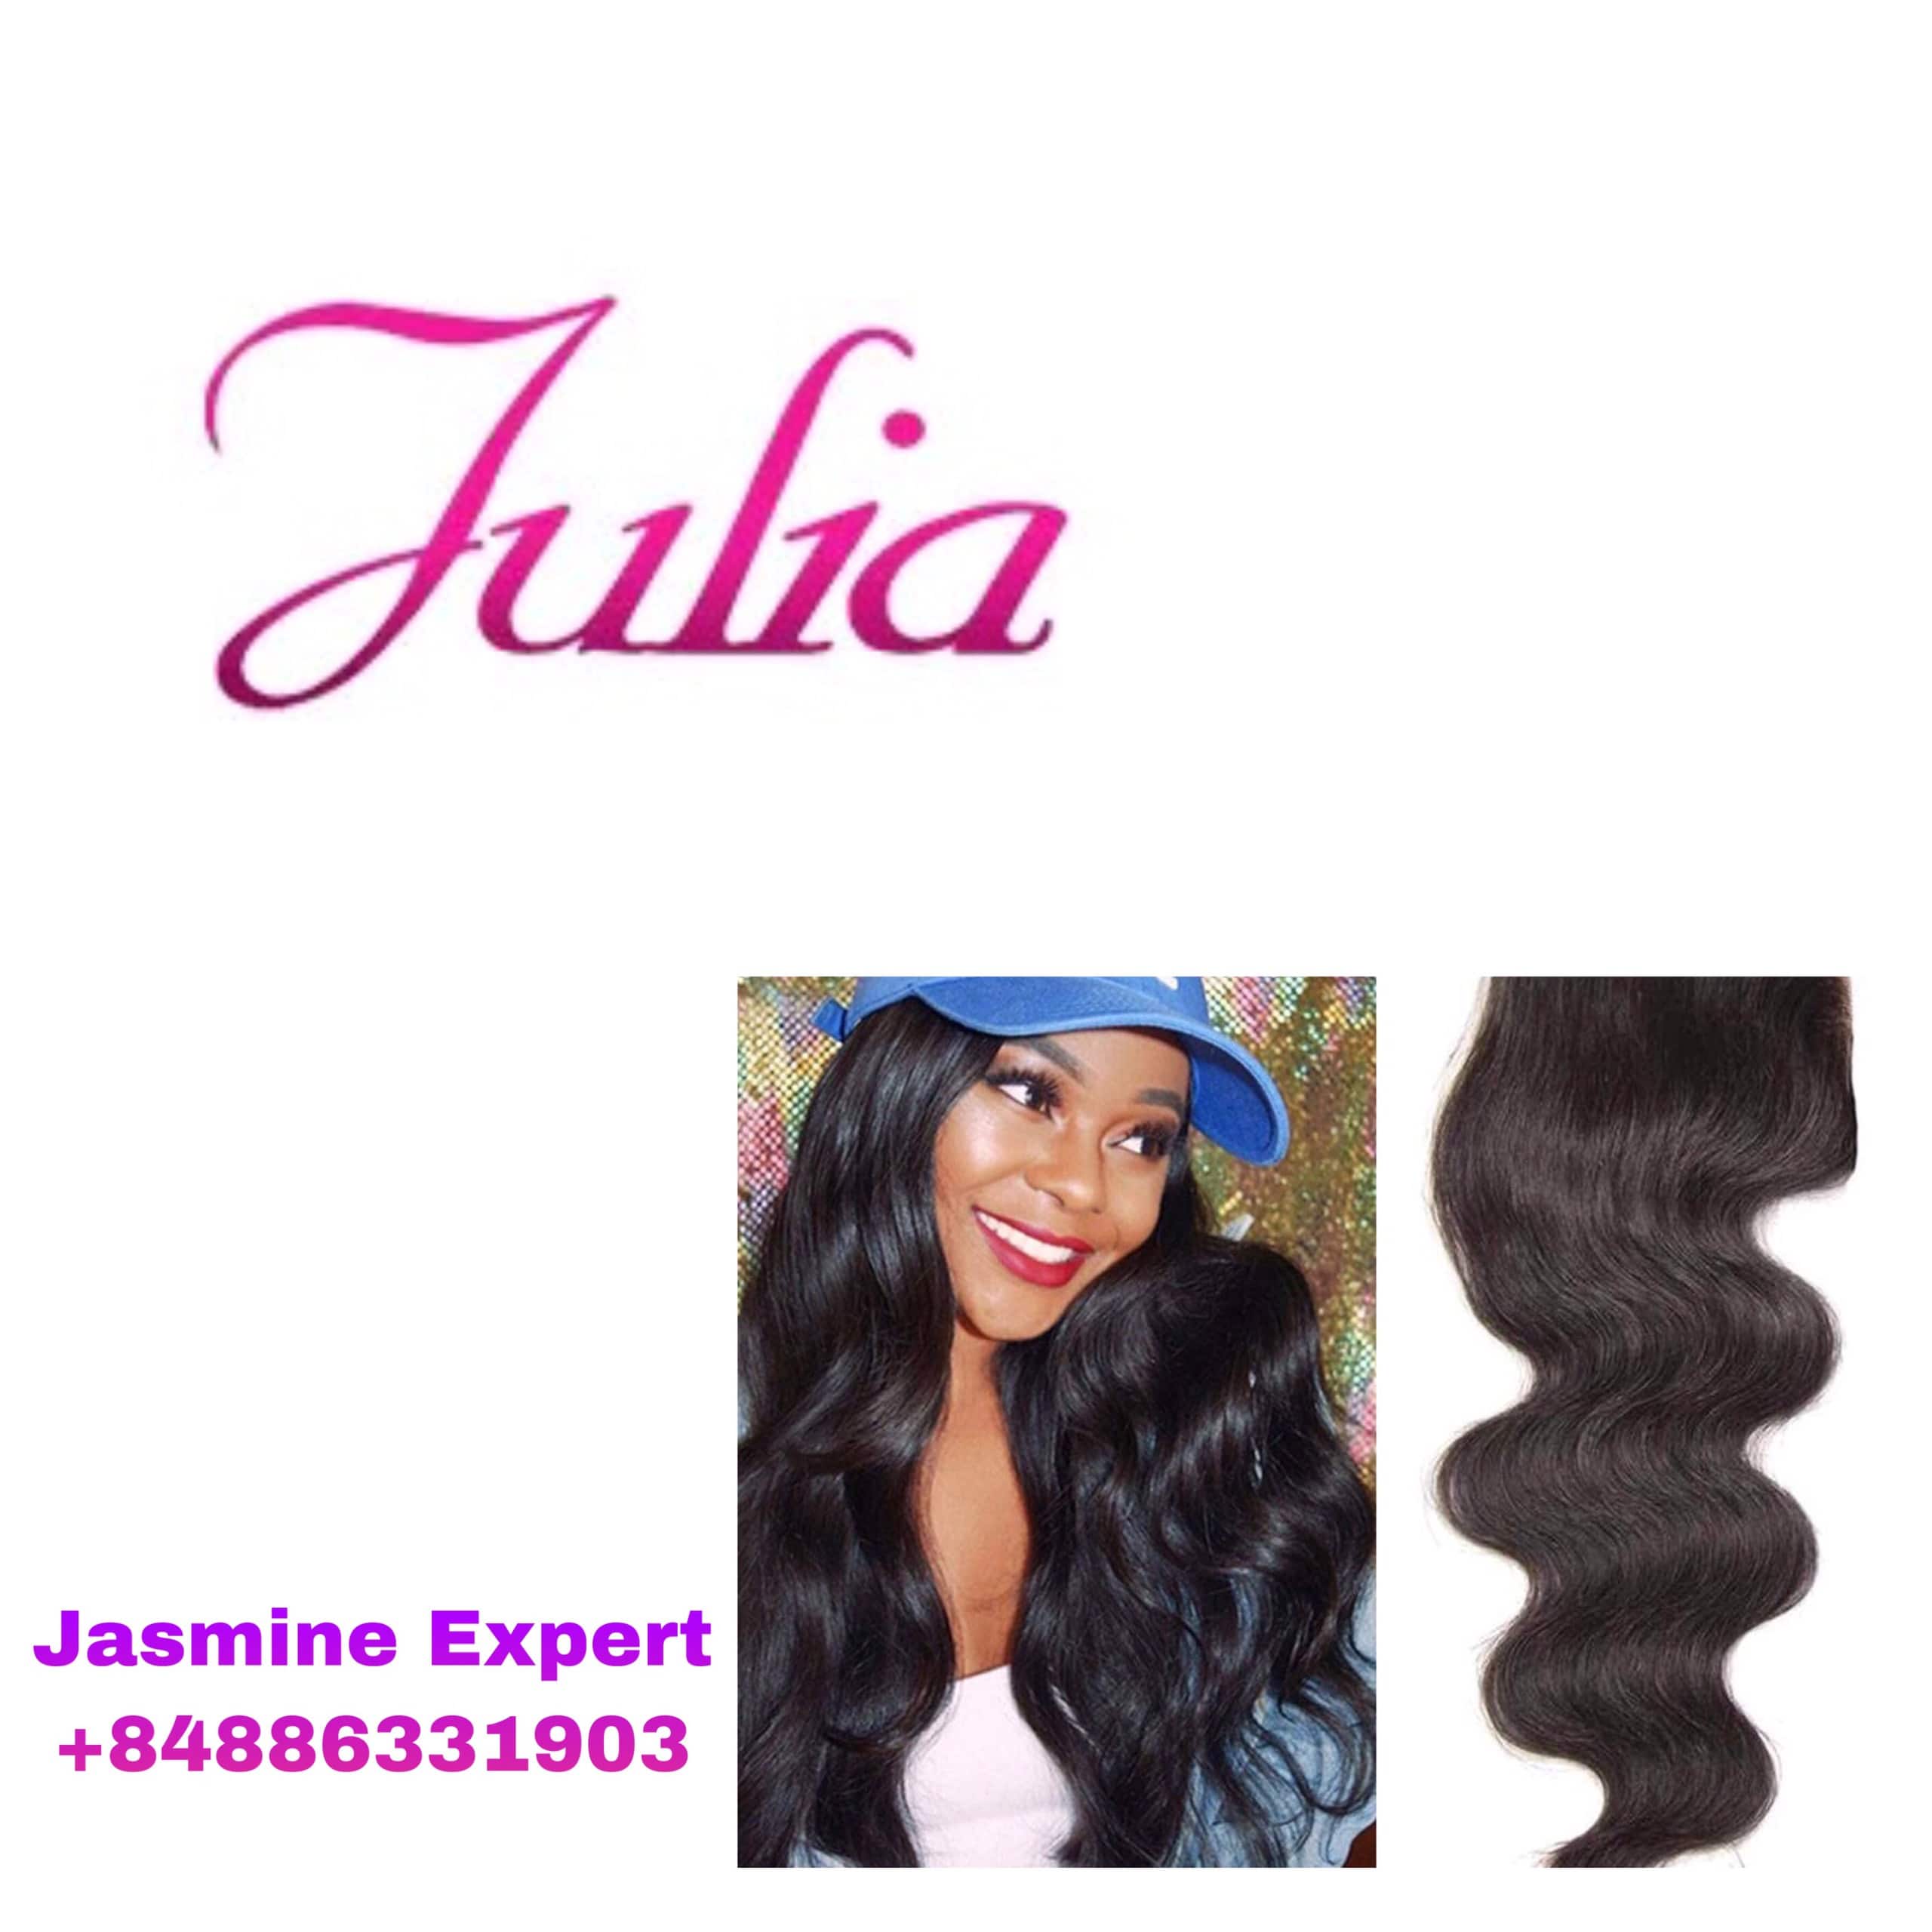 julia-hair-extensions-raw-peruvian-hair-vs-brazilian